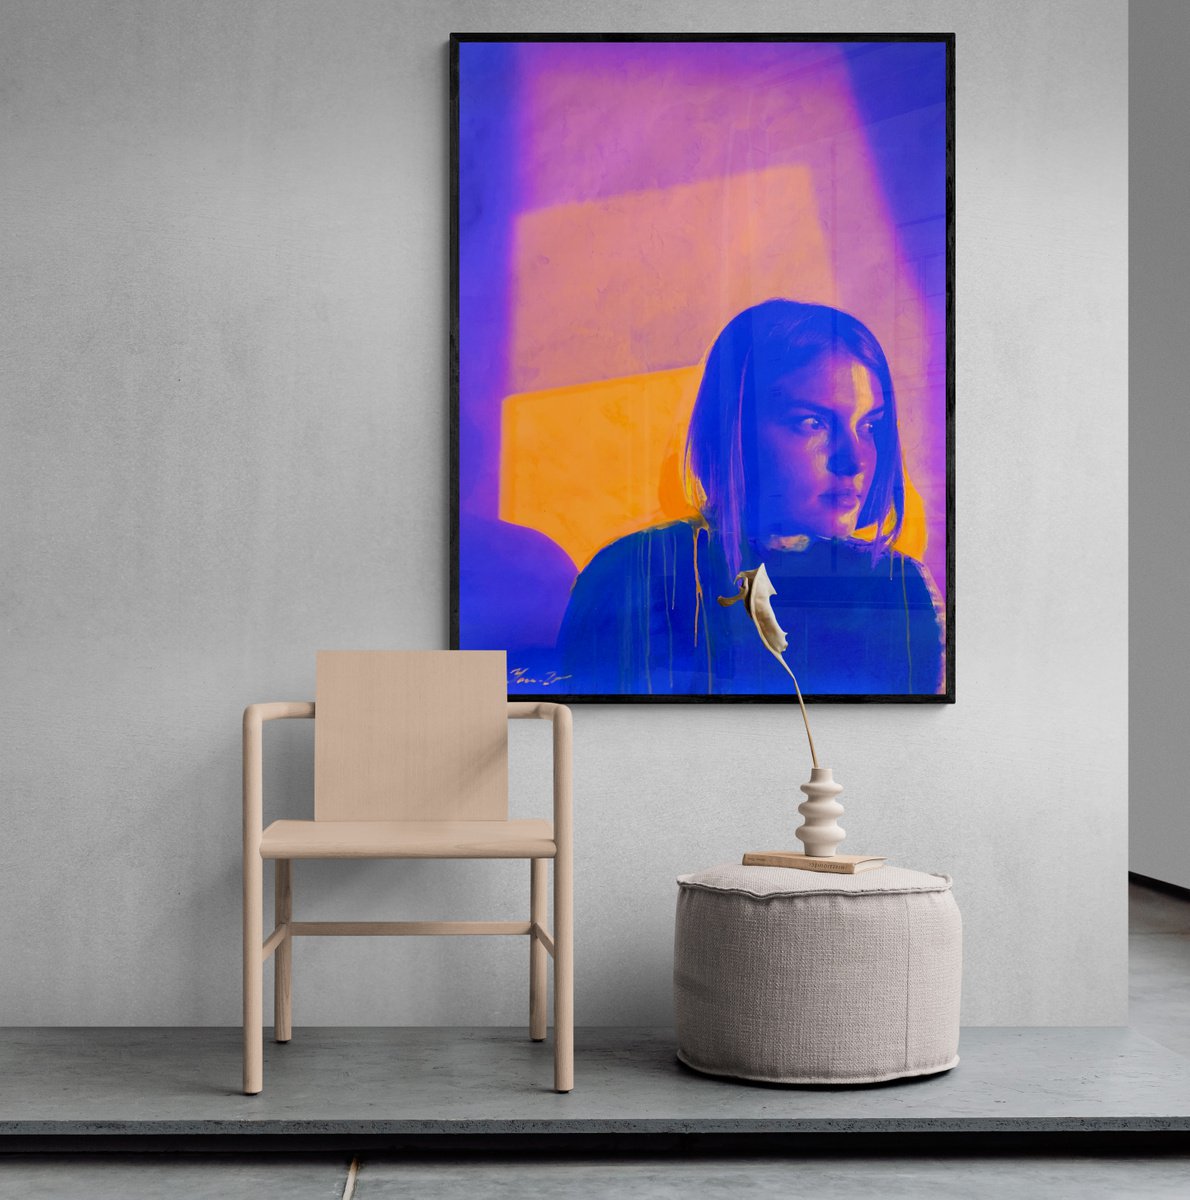 Bright painting - Blue-orange girl - Pop Art - Portrait - Neon art - 130x100cm by Yaroslav Yasenev